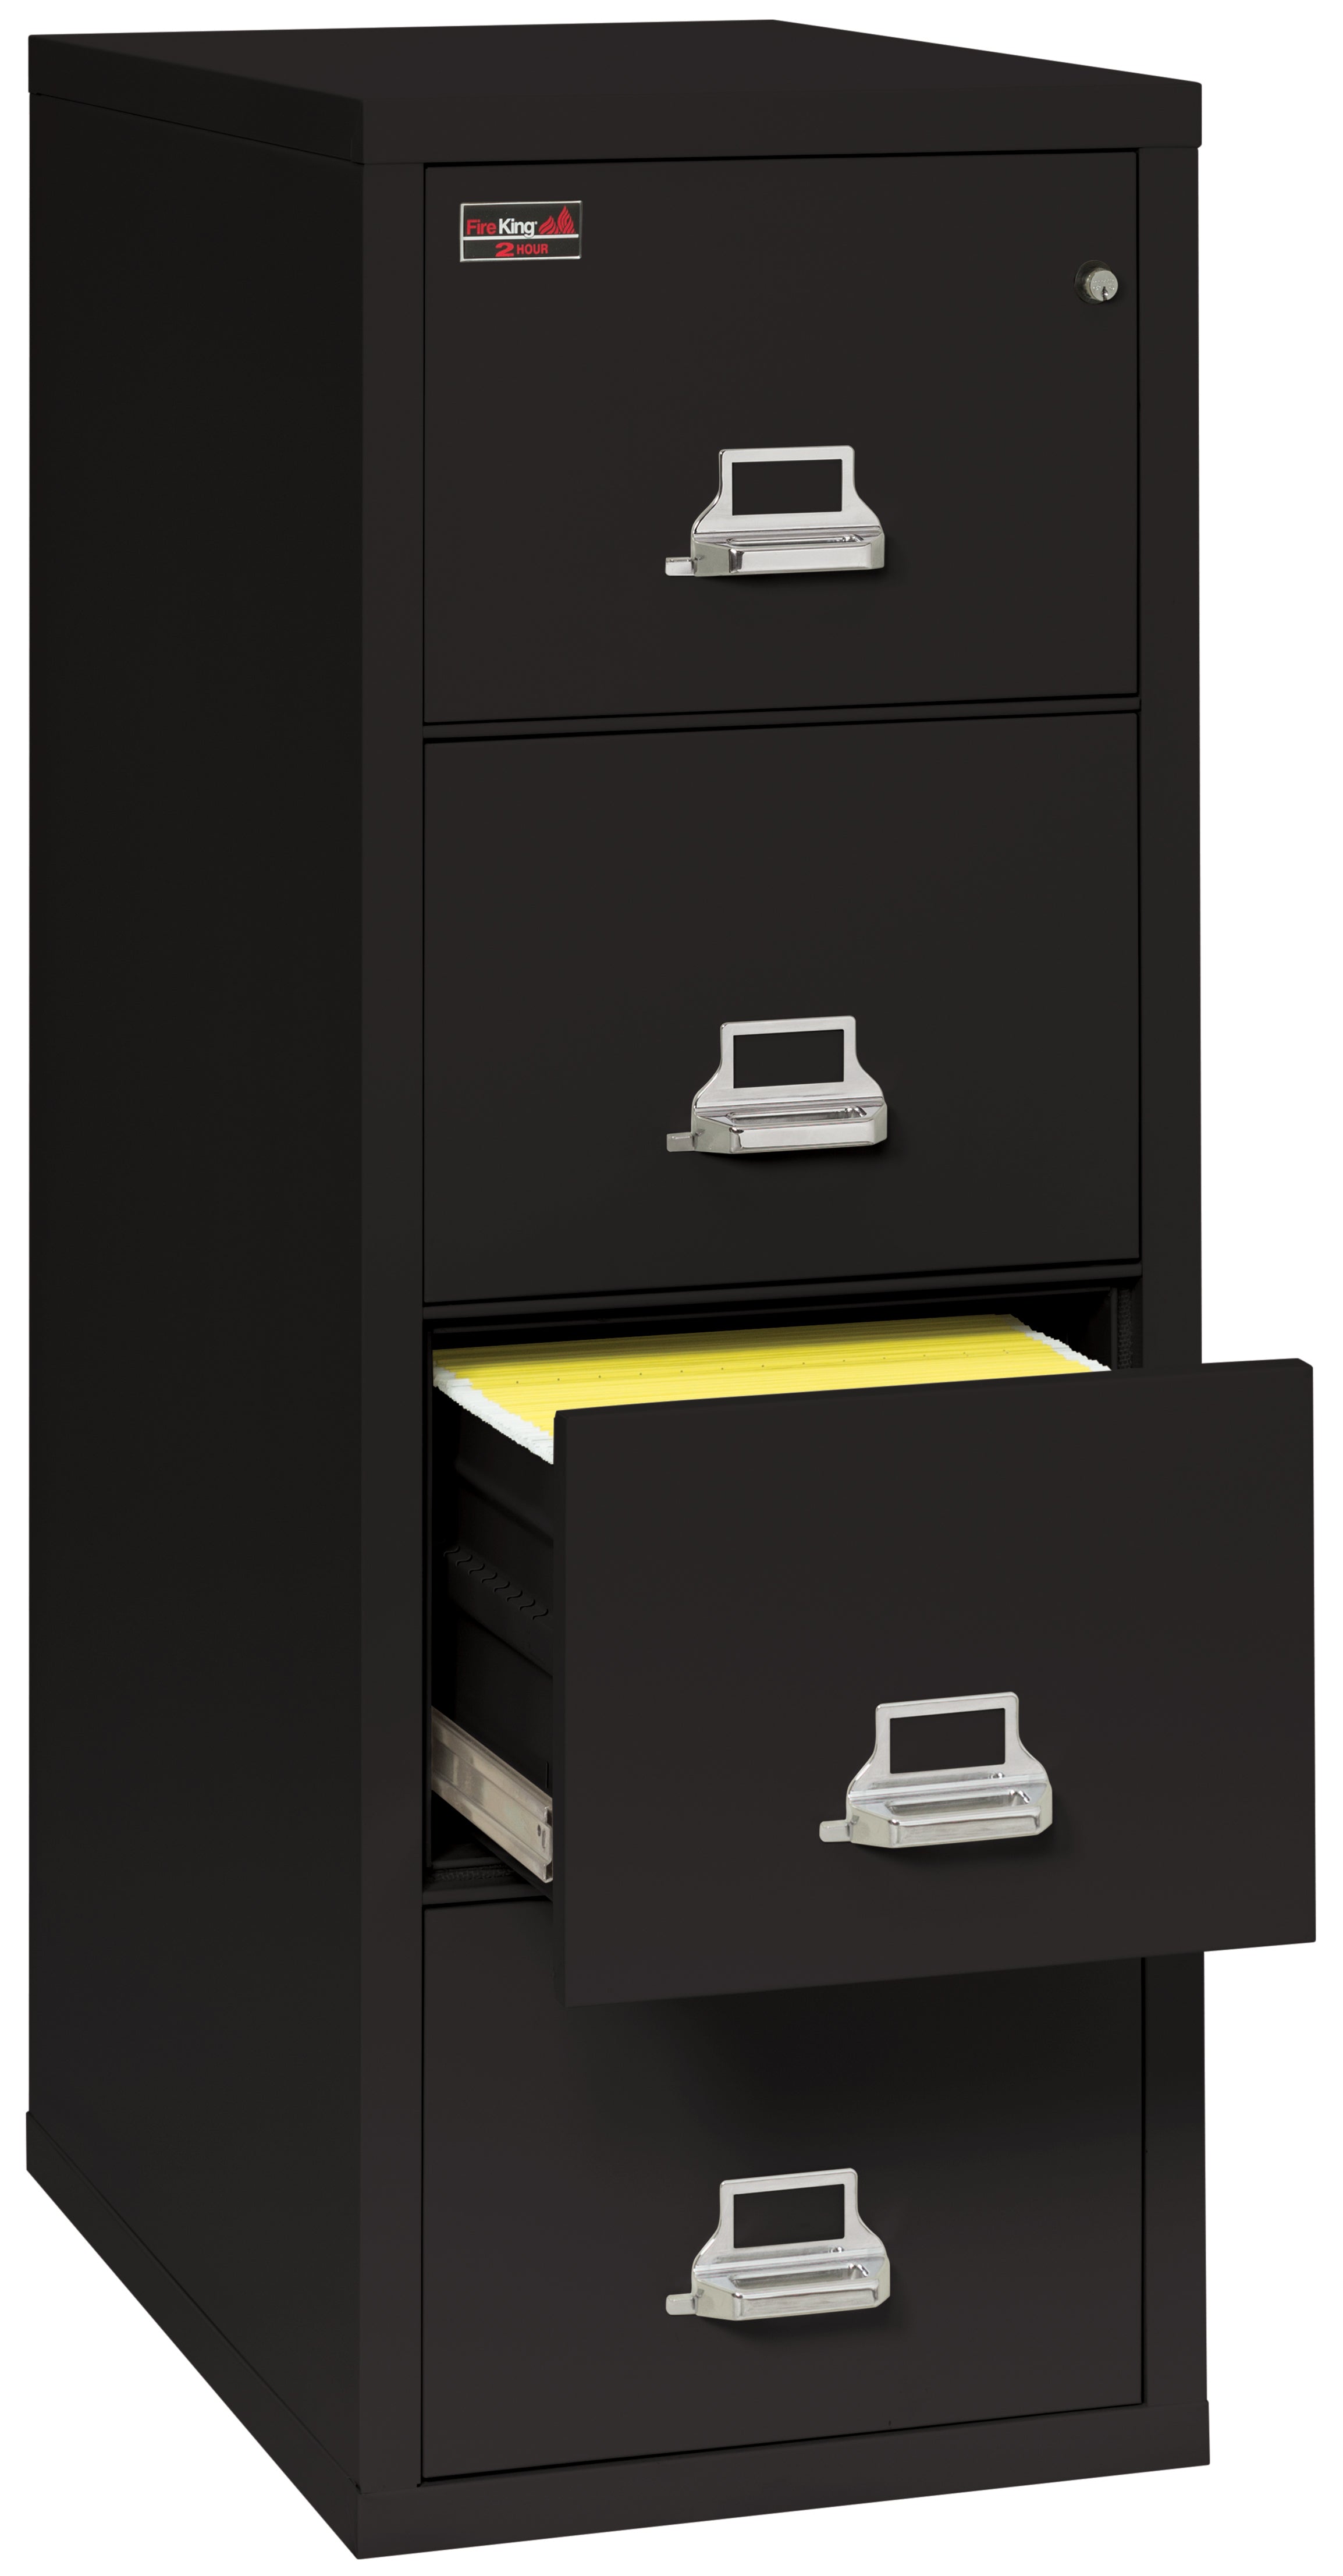 2 Hour Fire Resistant File Cabinet - 4 Drawer Letter 31" depth